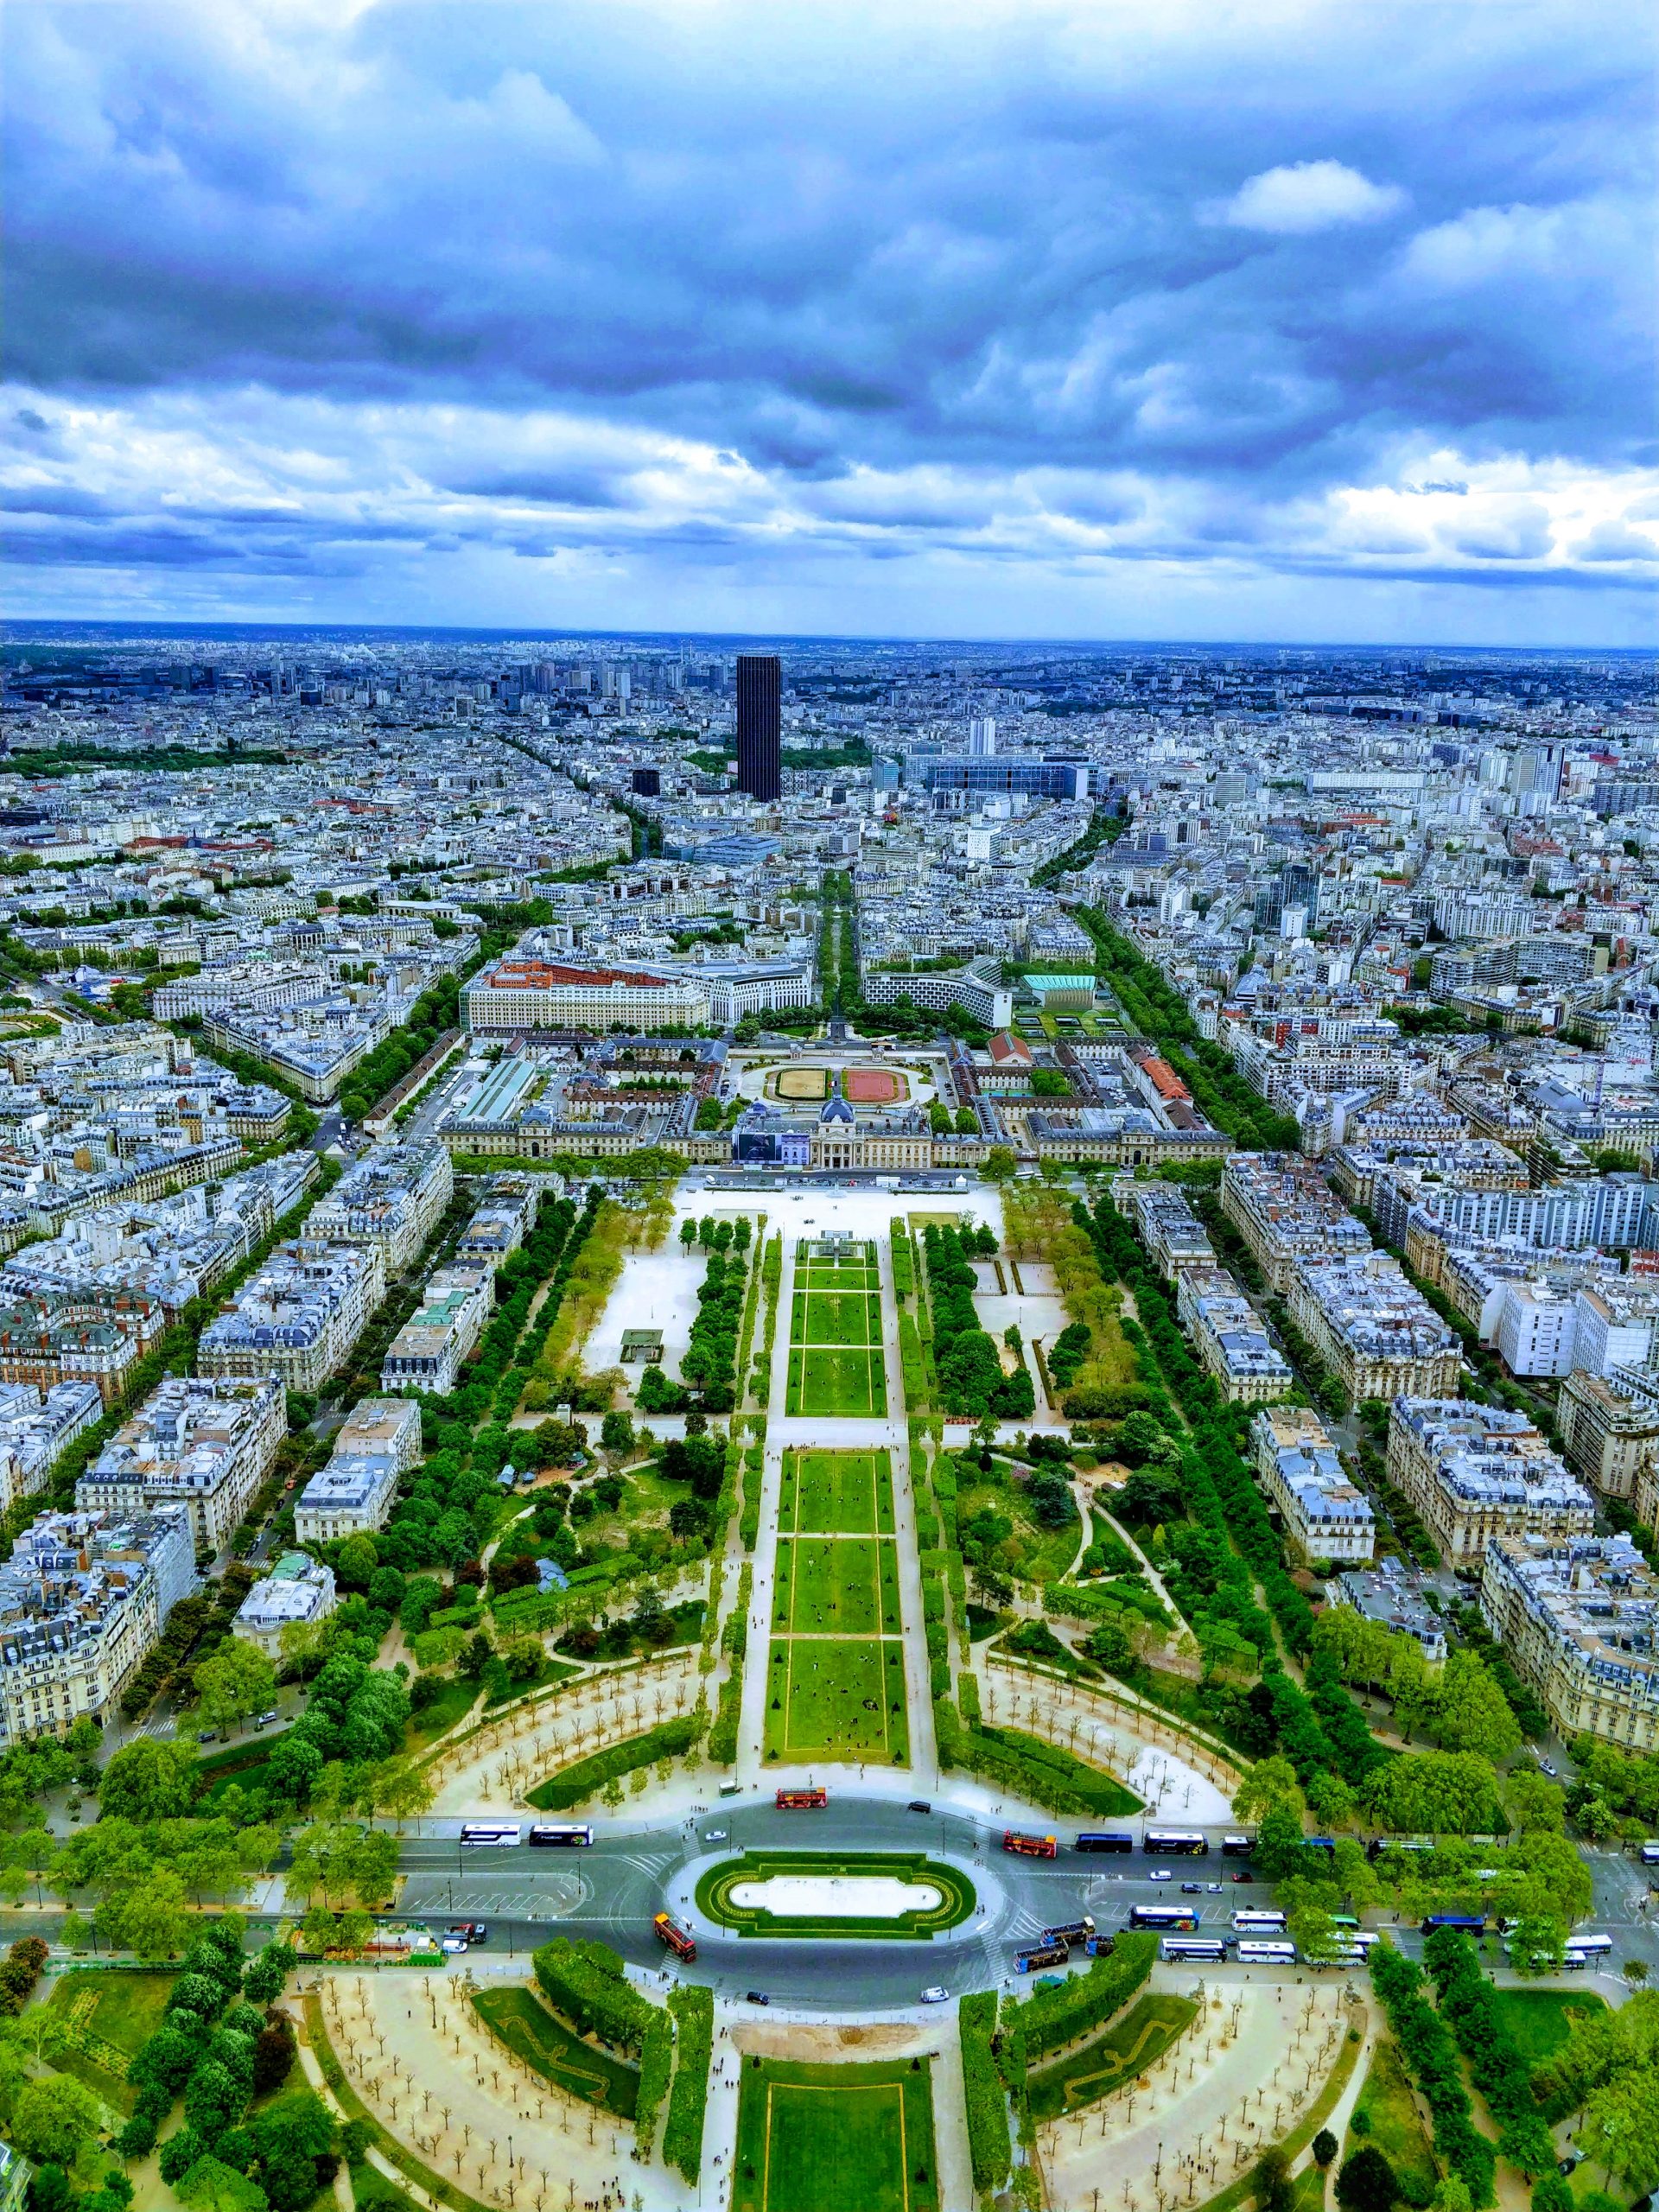 City of Love – Paris syndrome